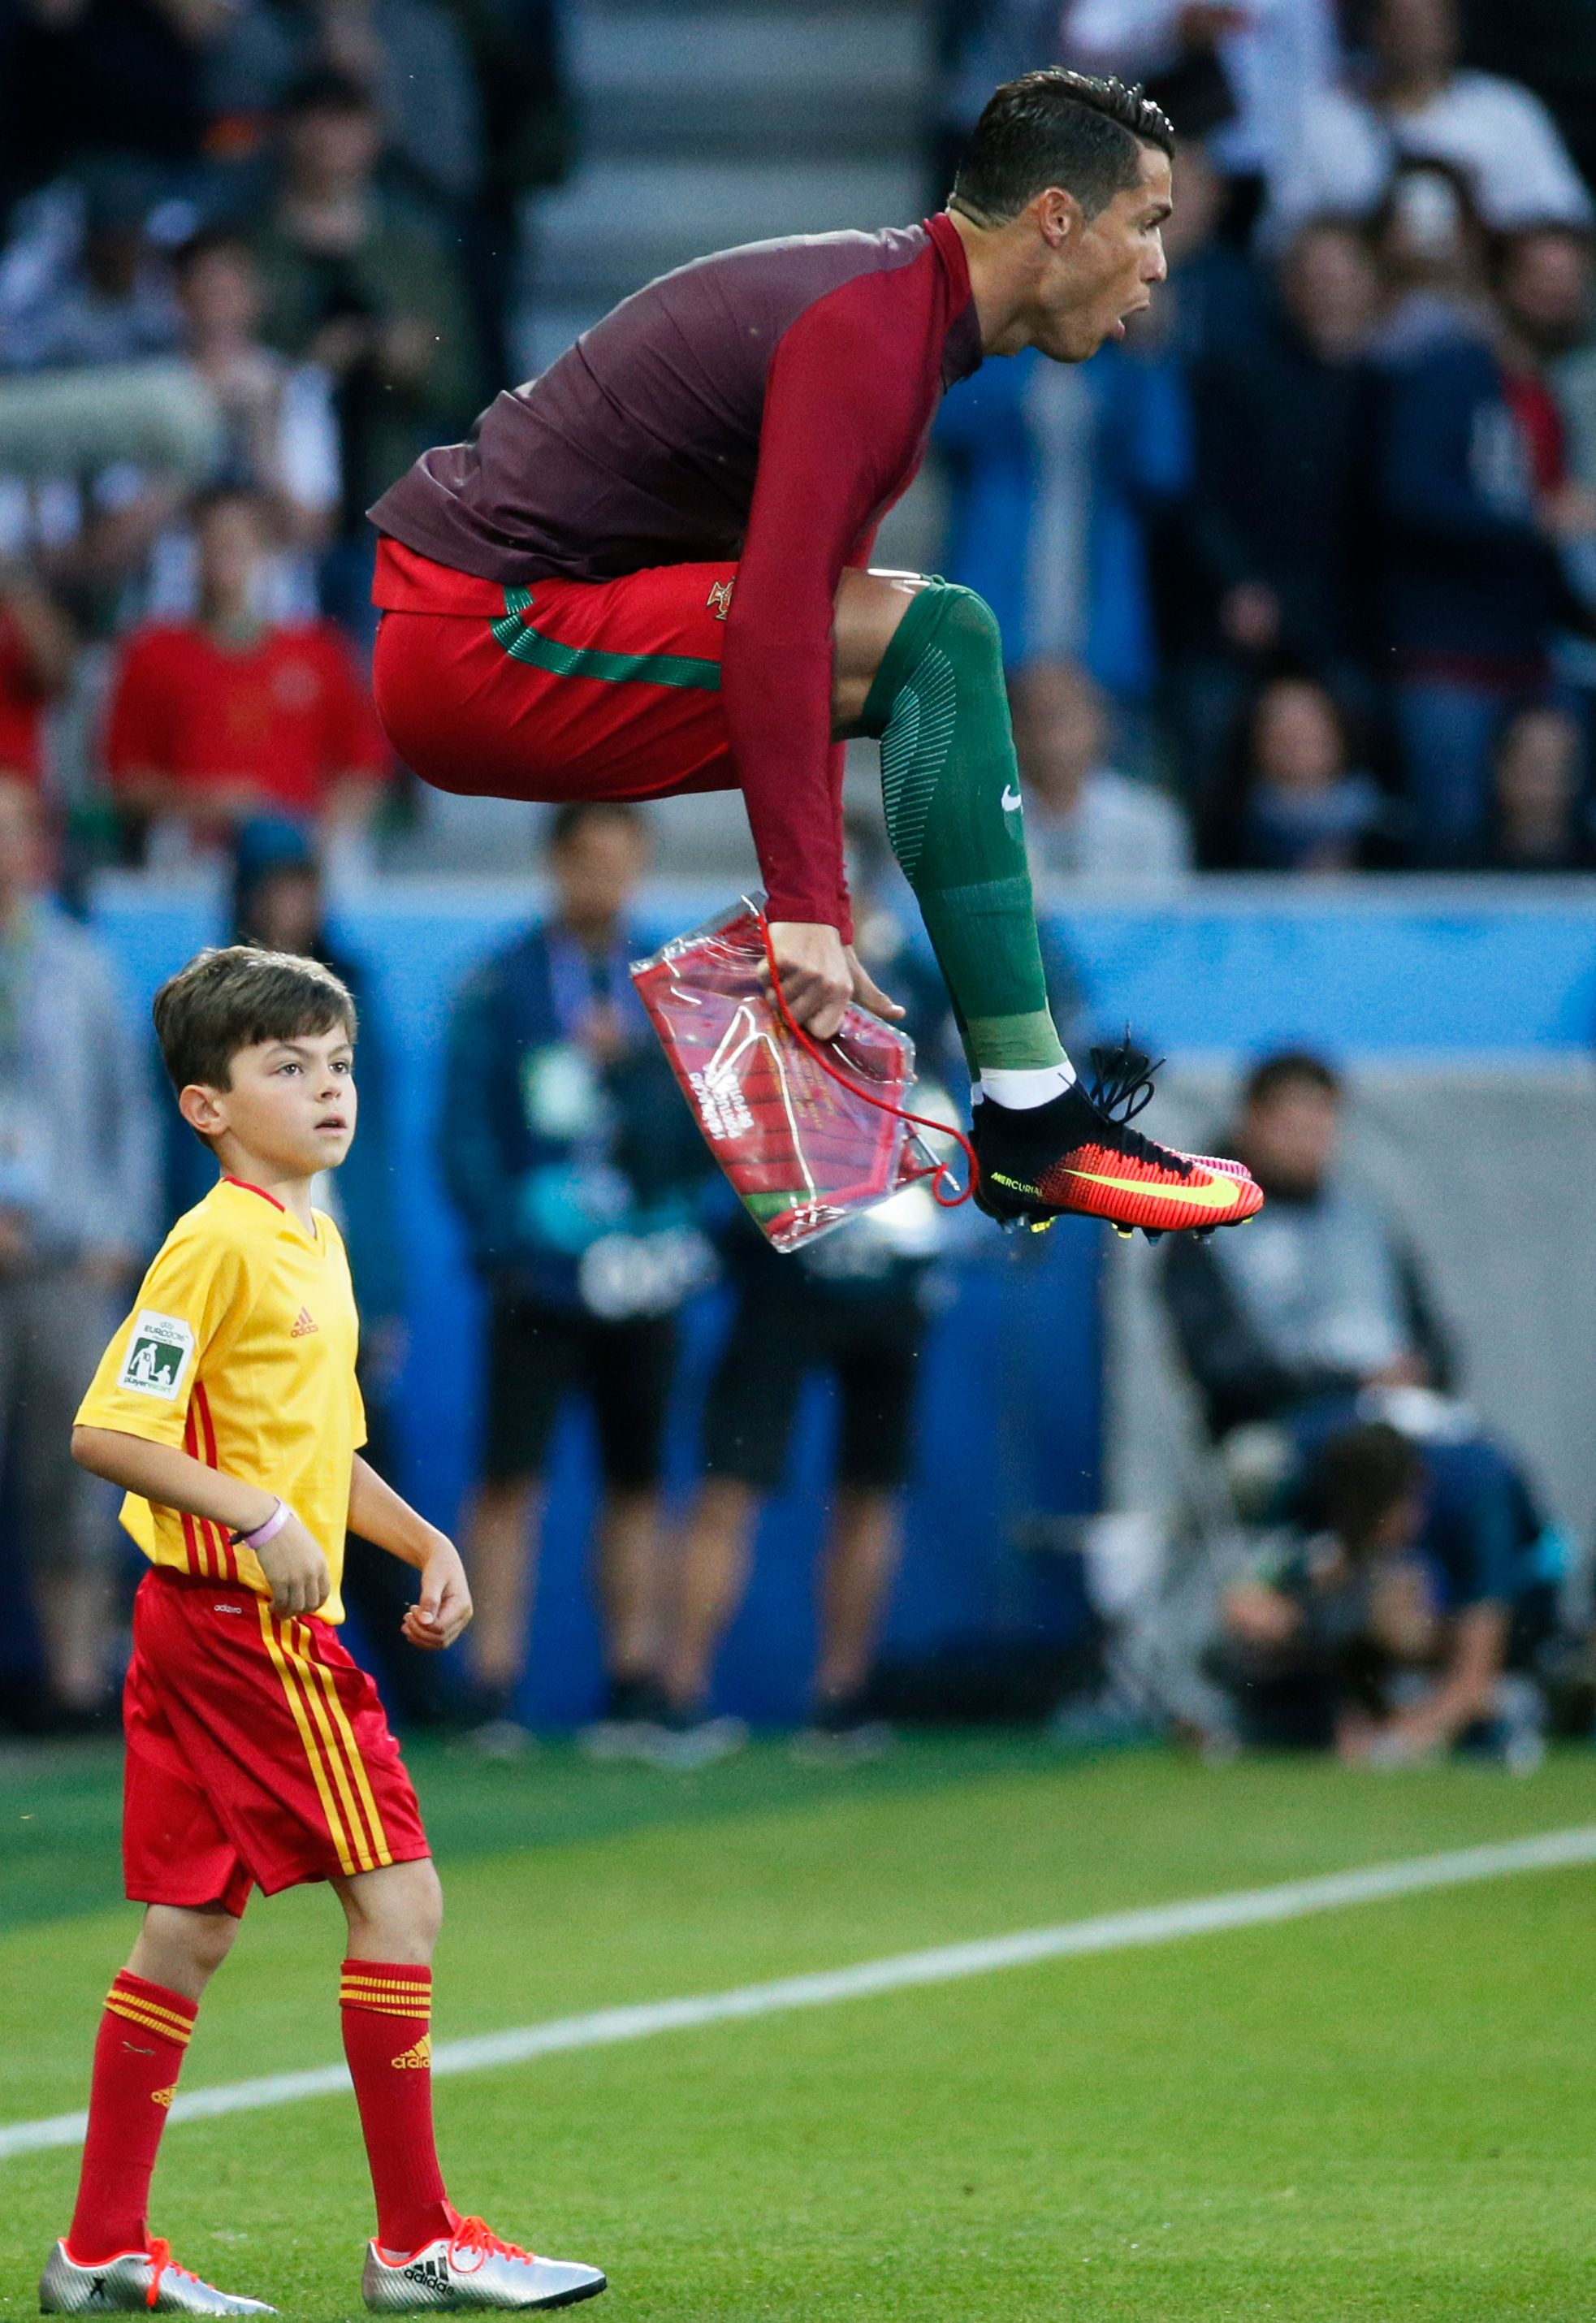 Portugal's Ronaldo jumping.